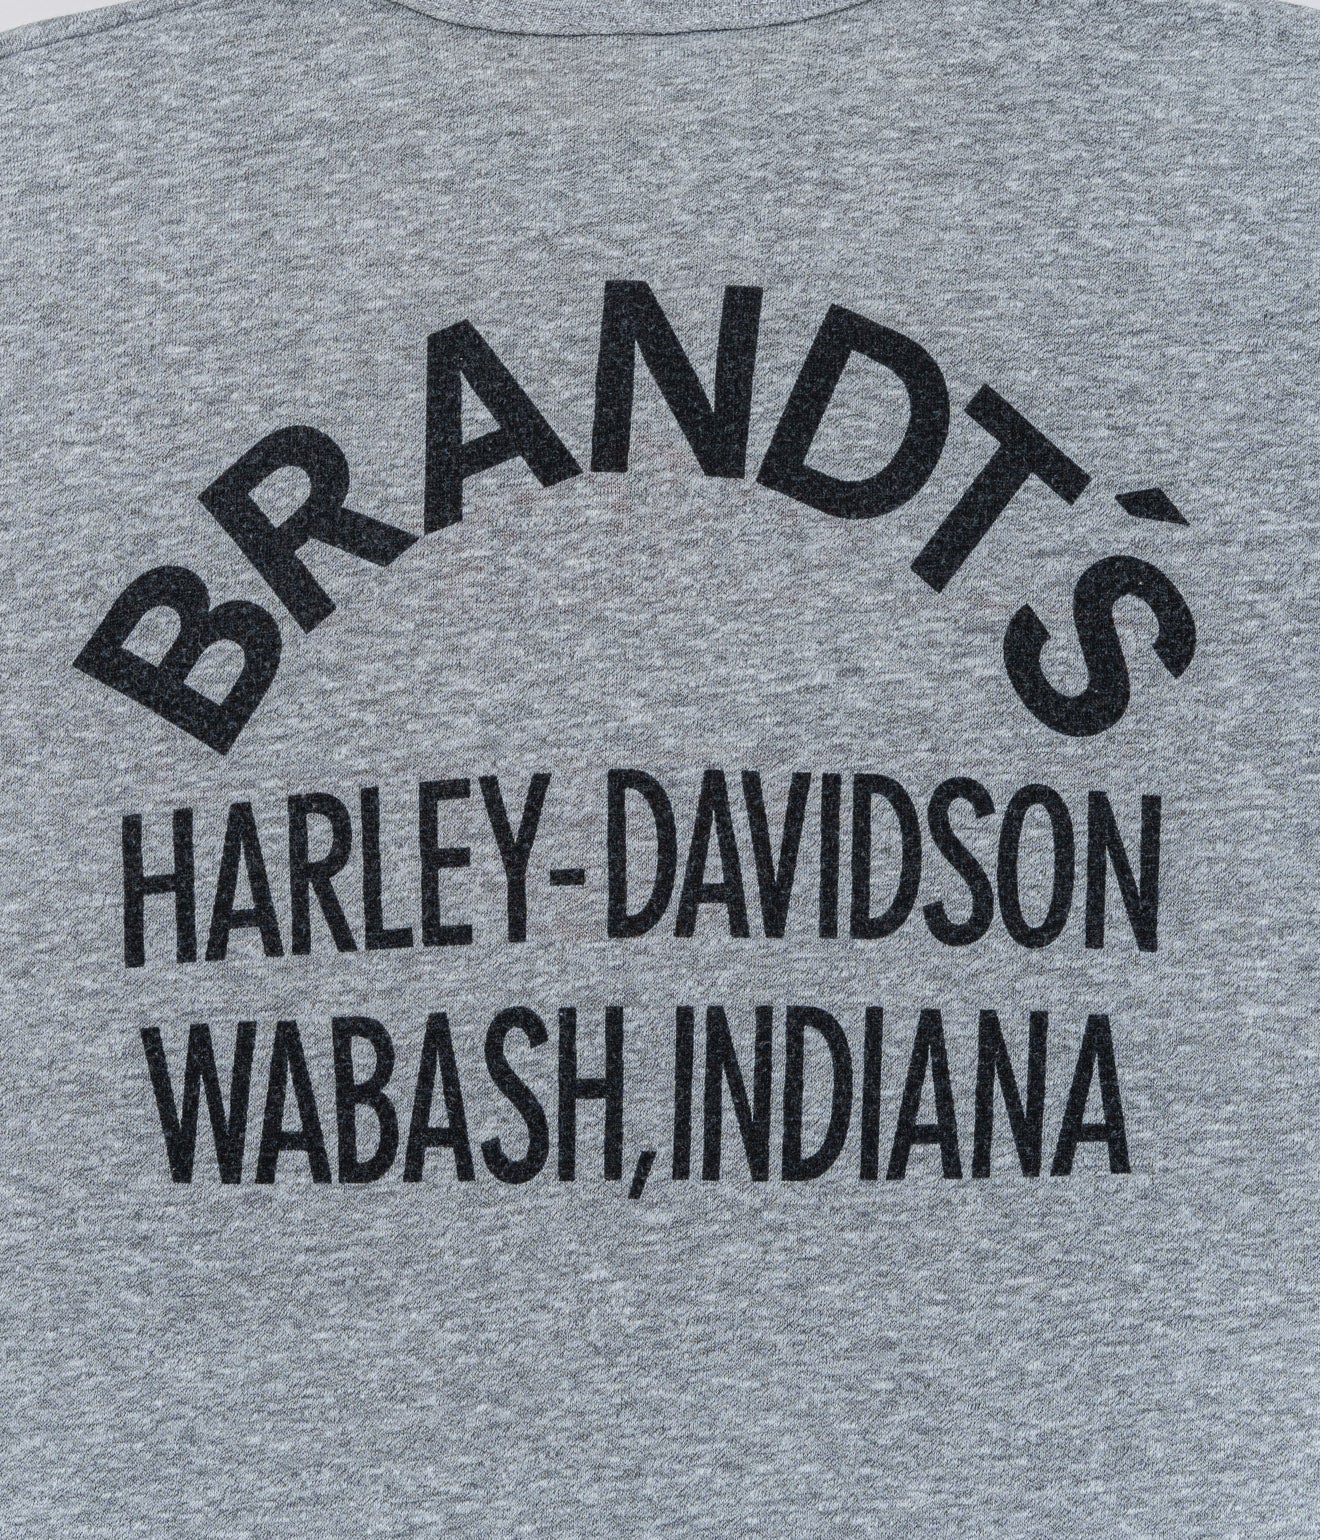 70's Champion "HARLEY DAVIDSON" T-SHIRT - WEAREALLANIMALS